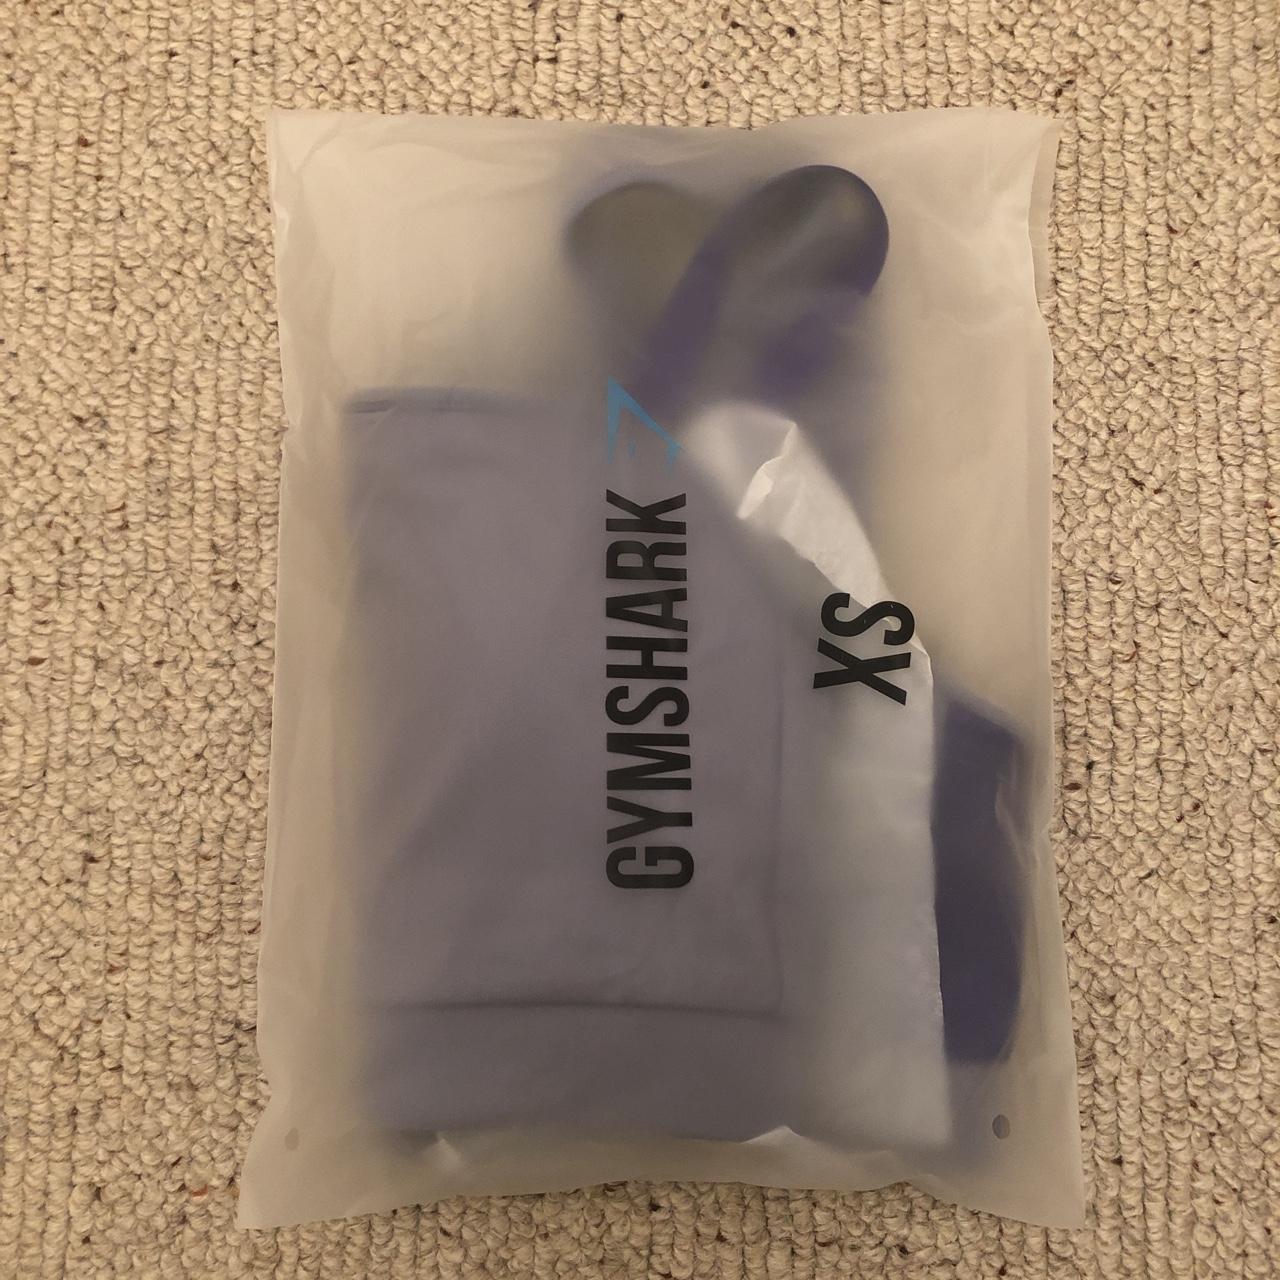 gymshark asymmetric sports bra in blue steel indigo